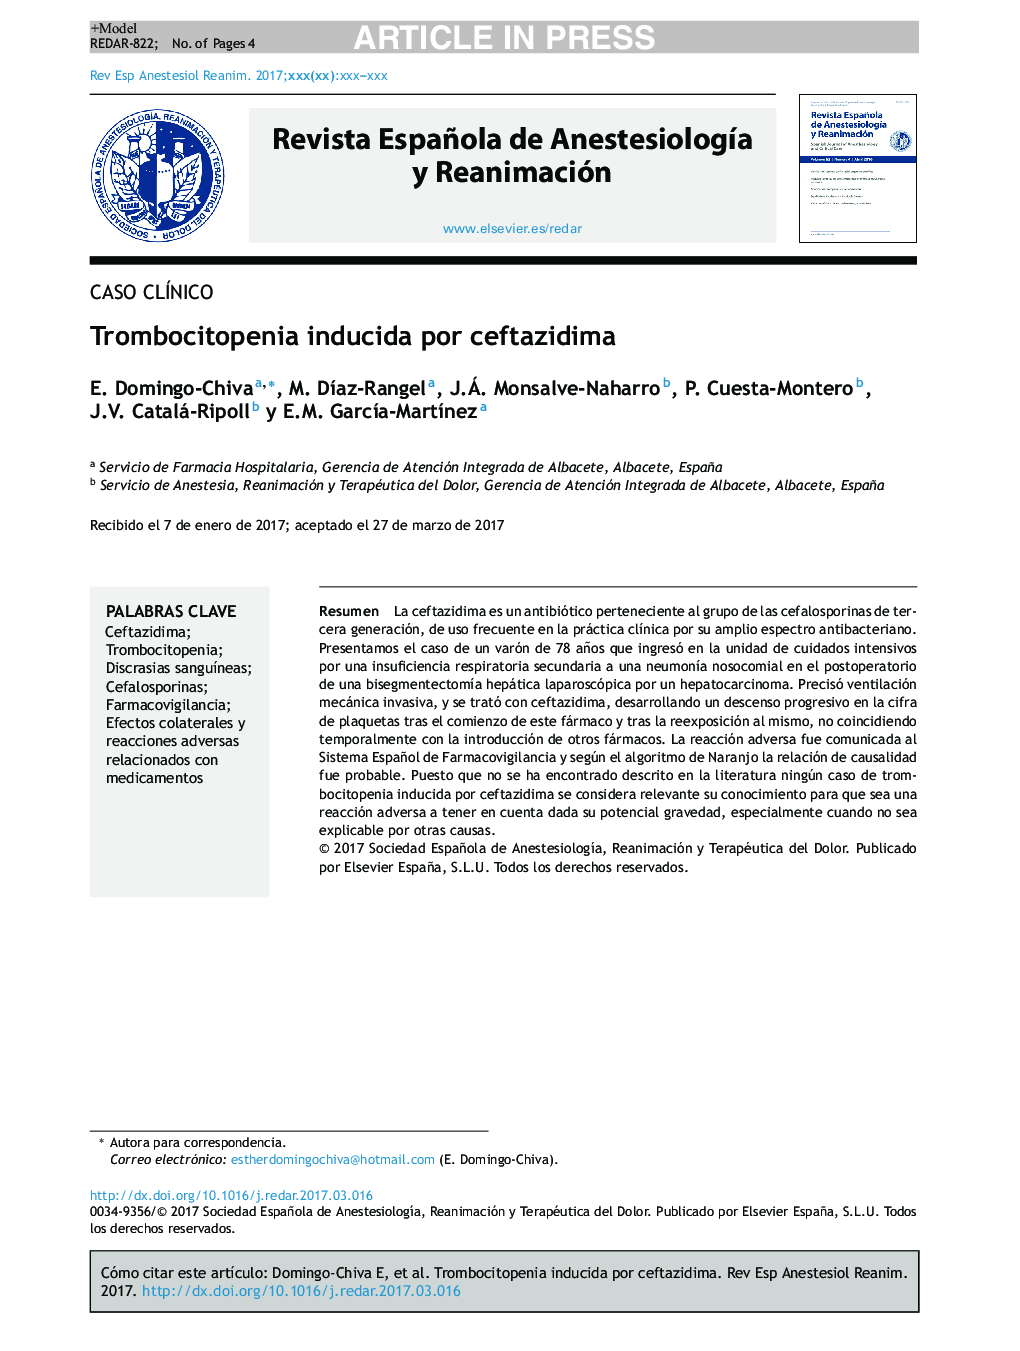 Trombocitopenia inducida por ceftazidima